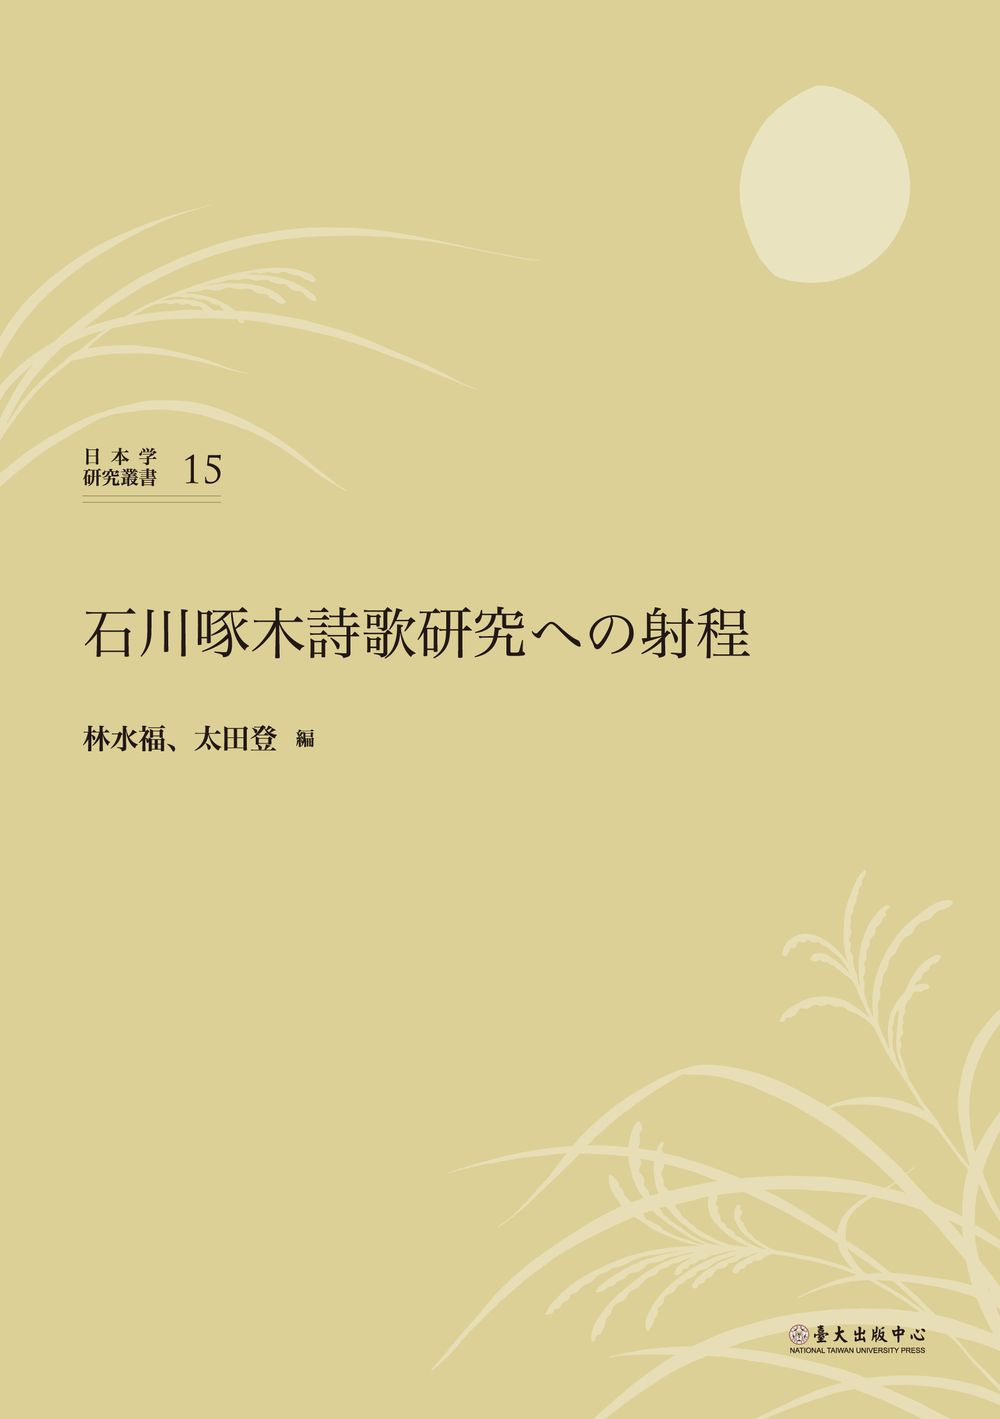 The Scope of the Research on Takuboku Ishikawa's Poems